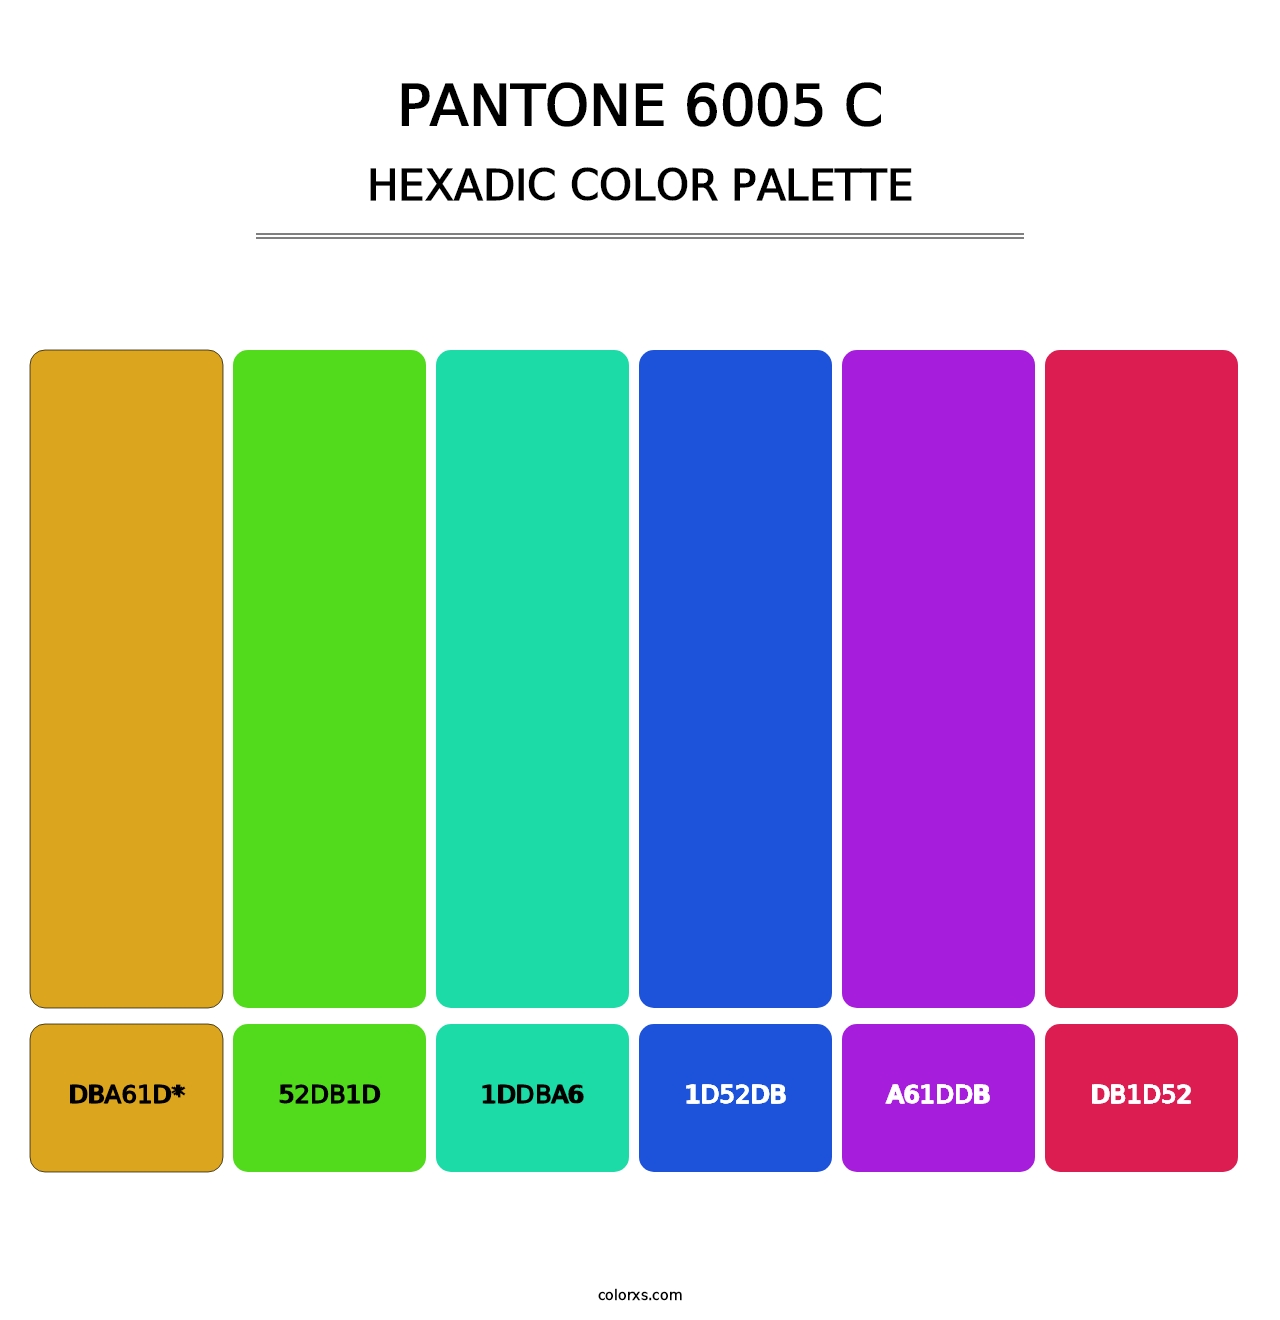 PANTONE 6005 C - Hexadic Color Palette